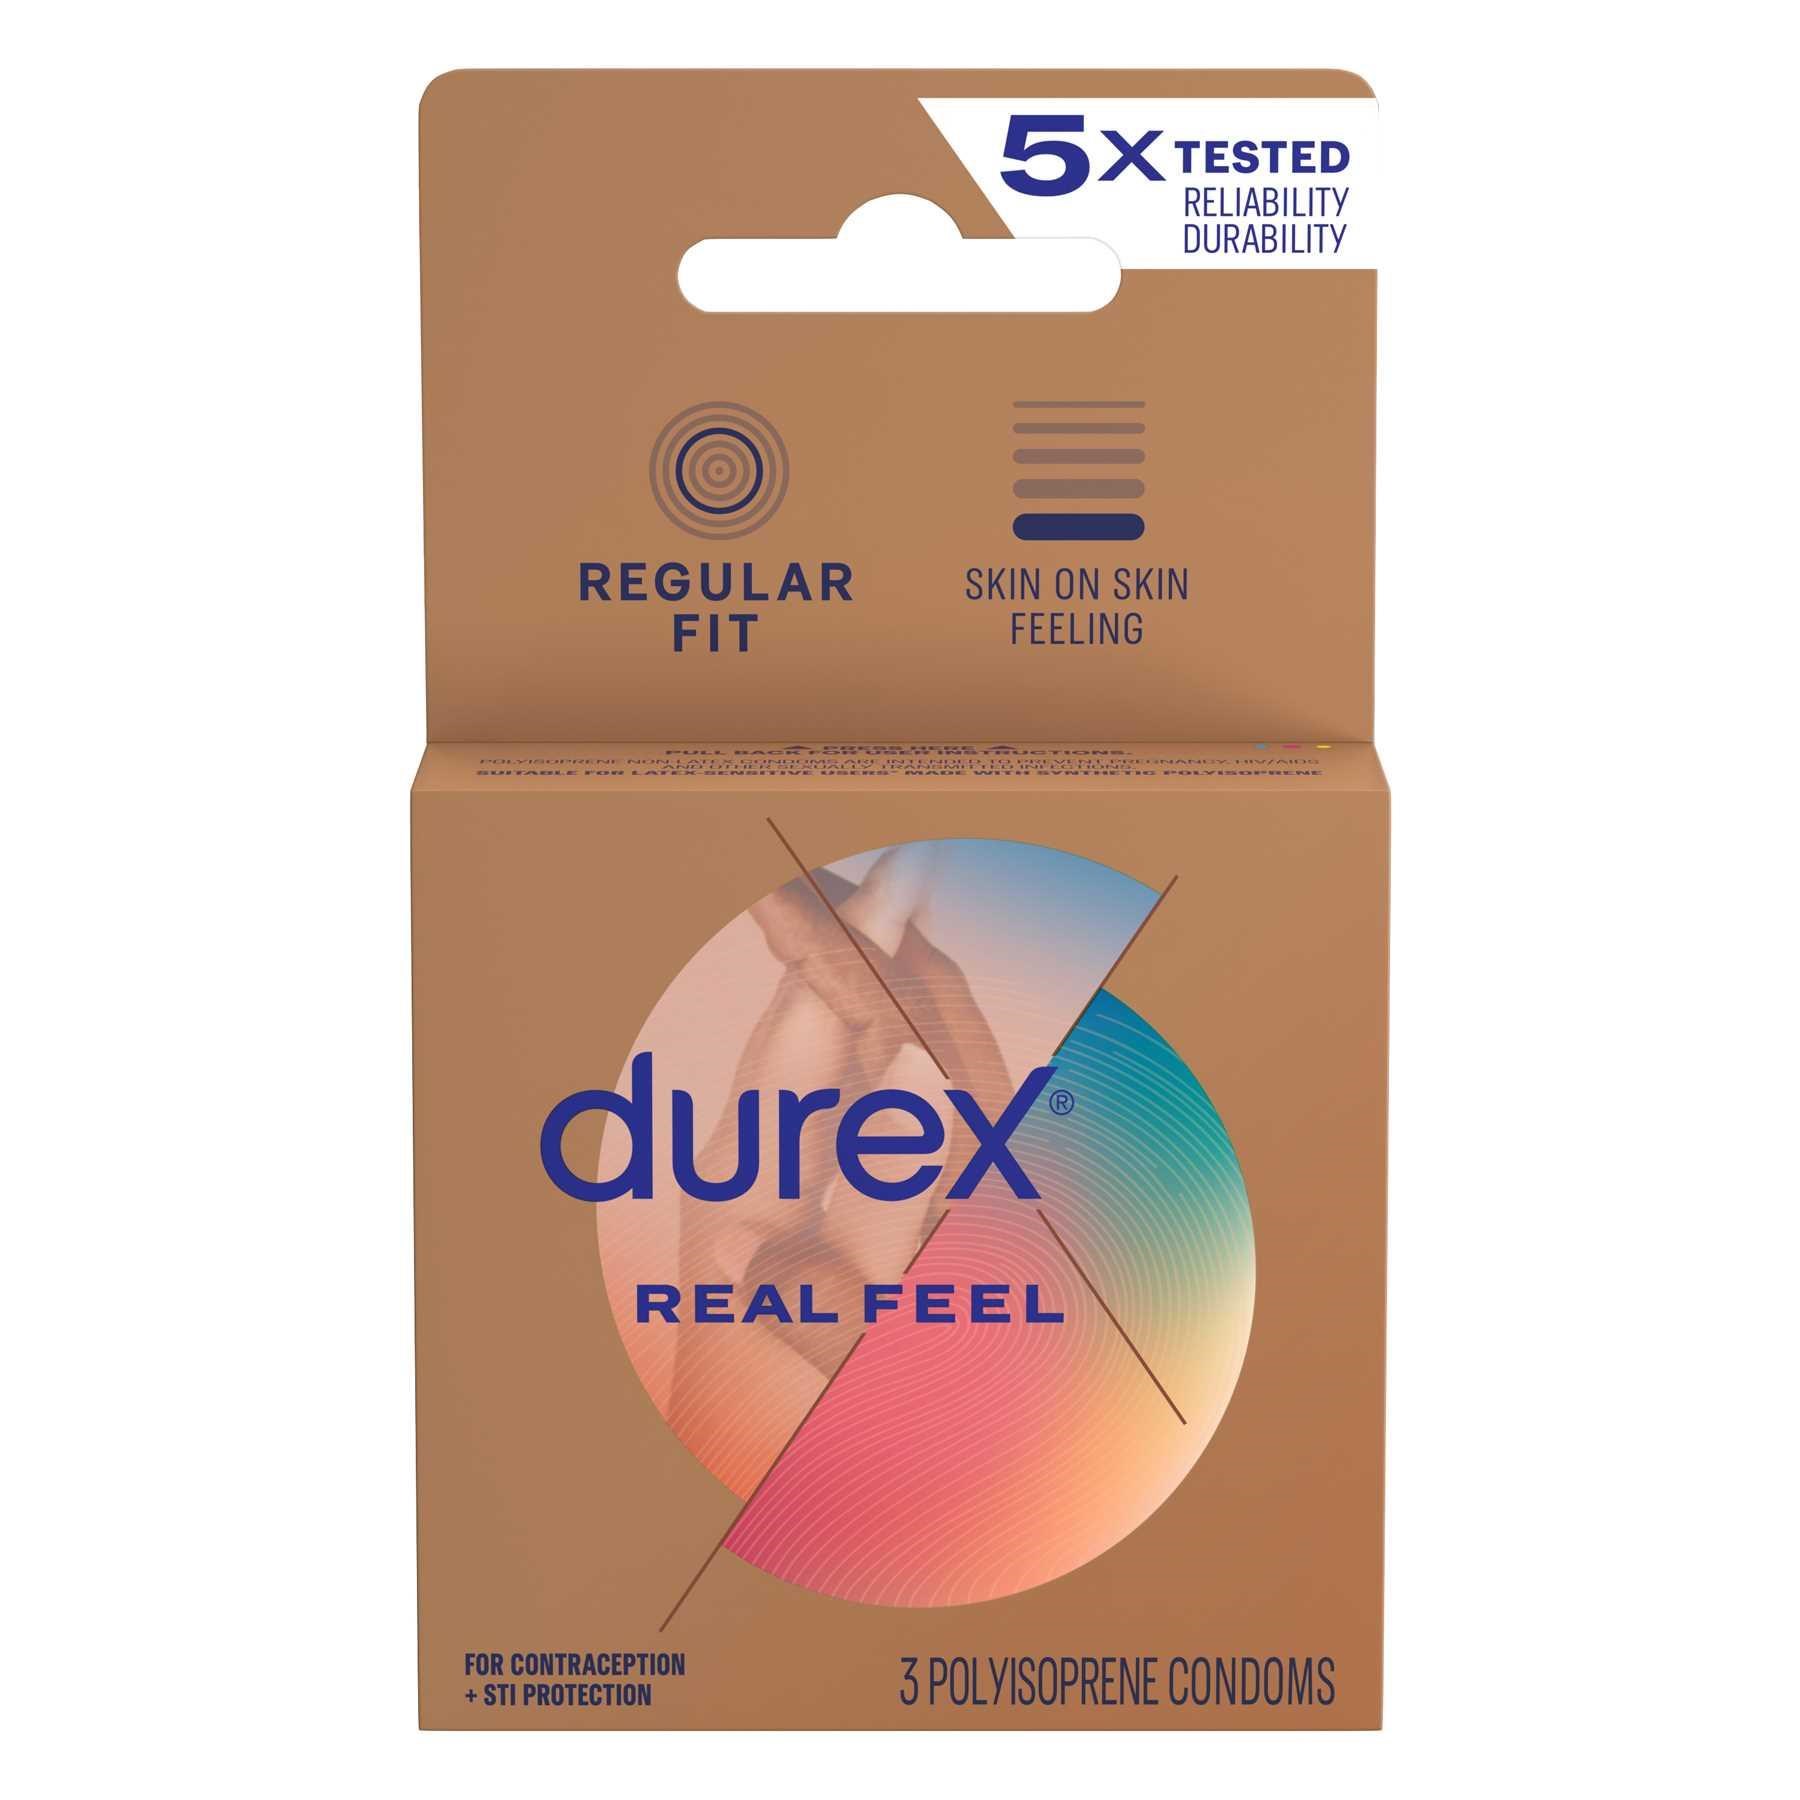 Durex Avanti Bare Realfeel Non-Latex Condom  front 3 count